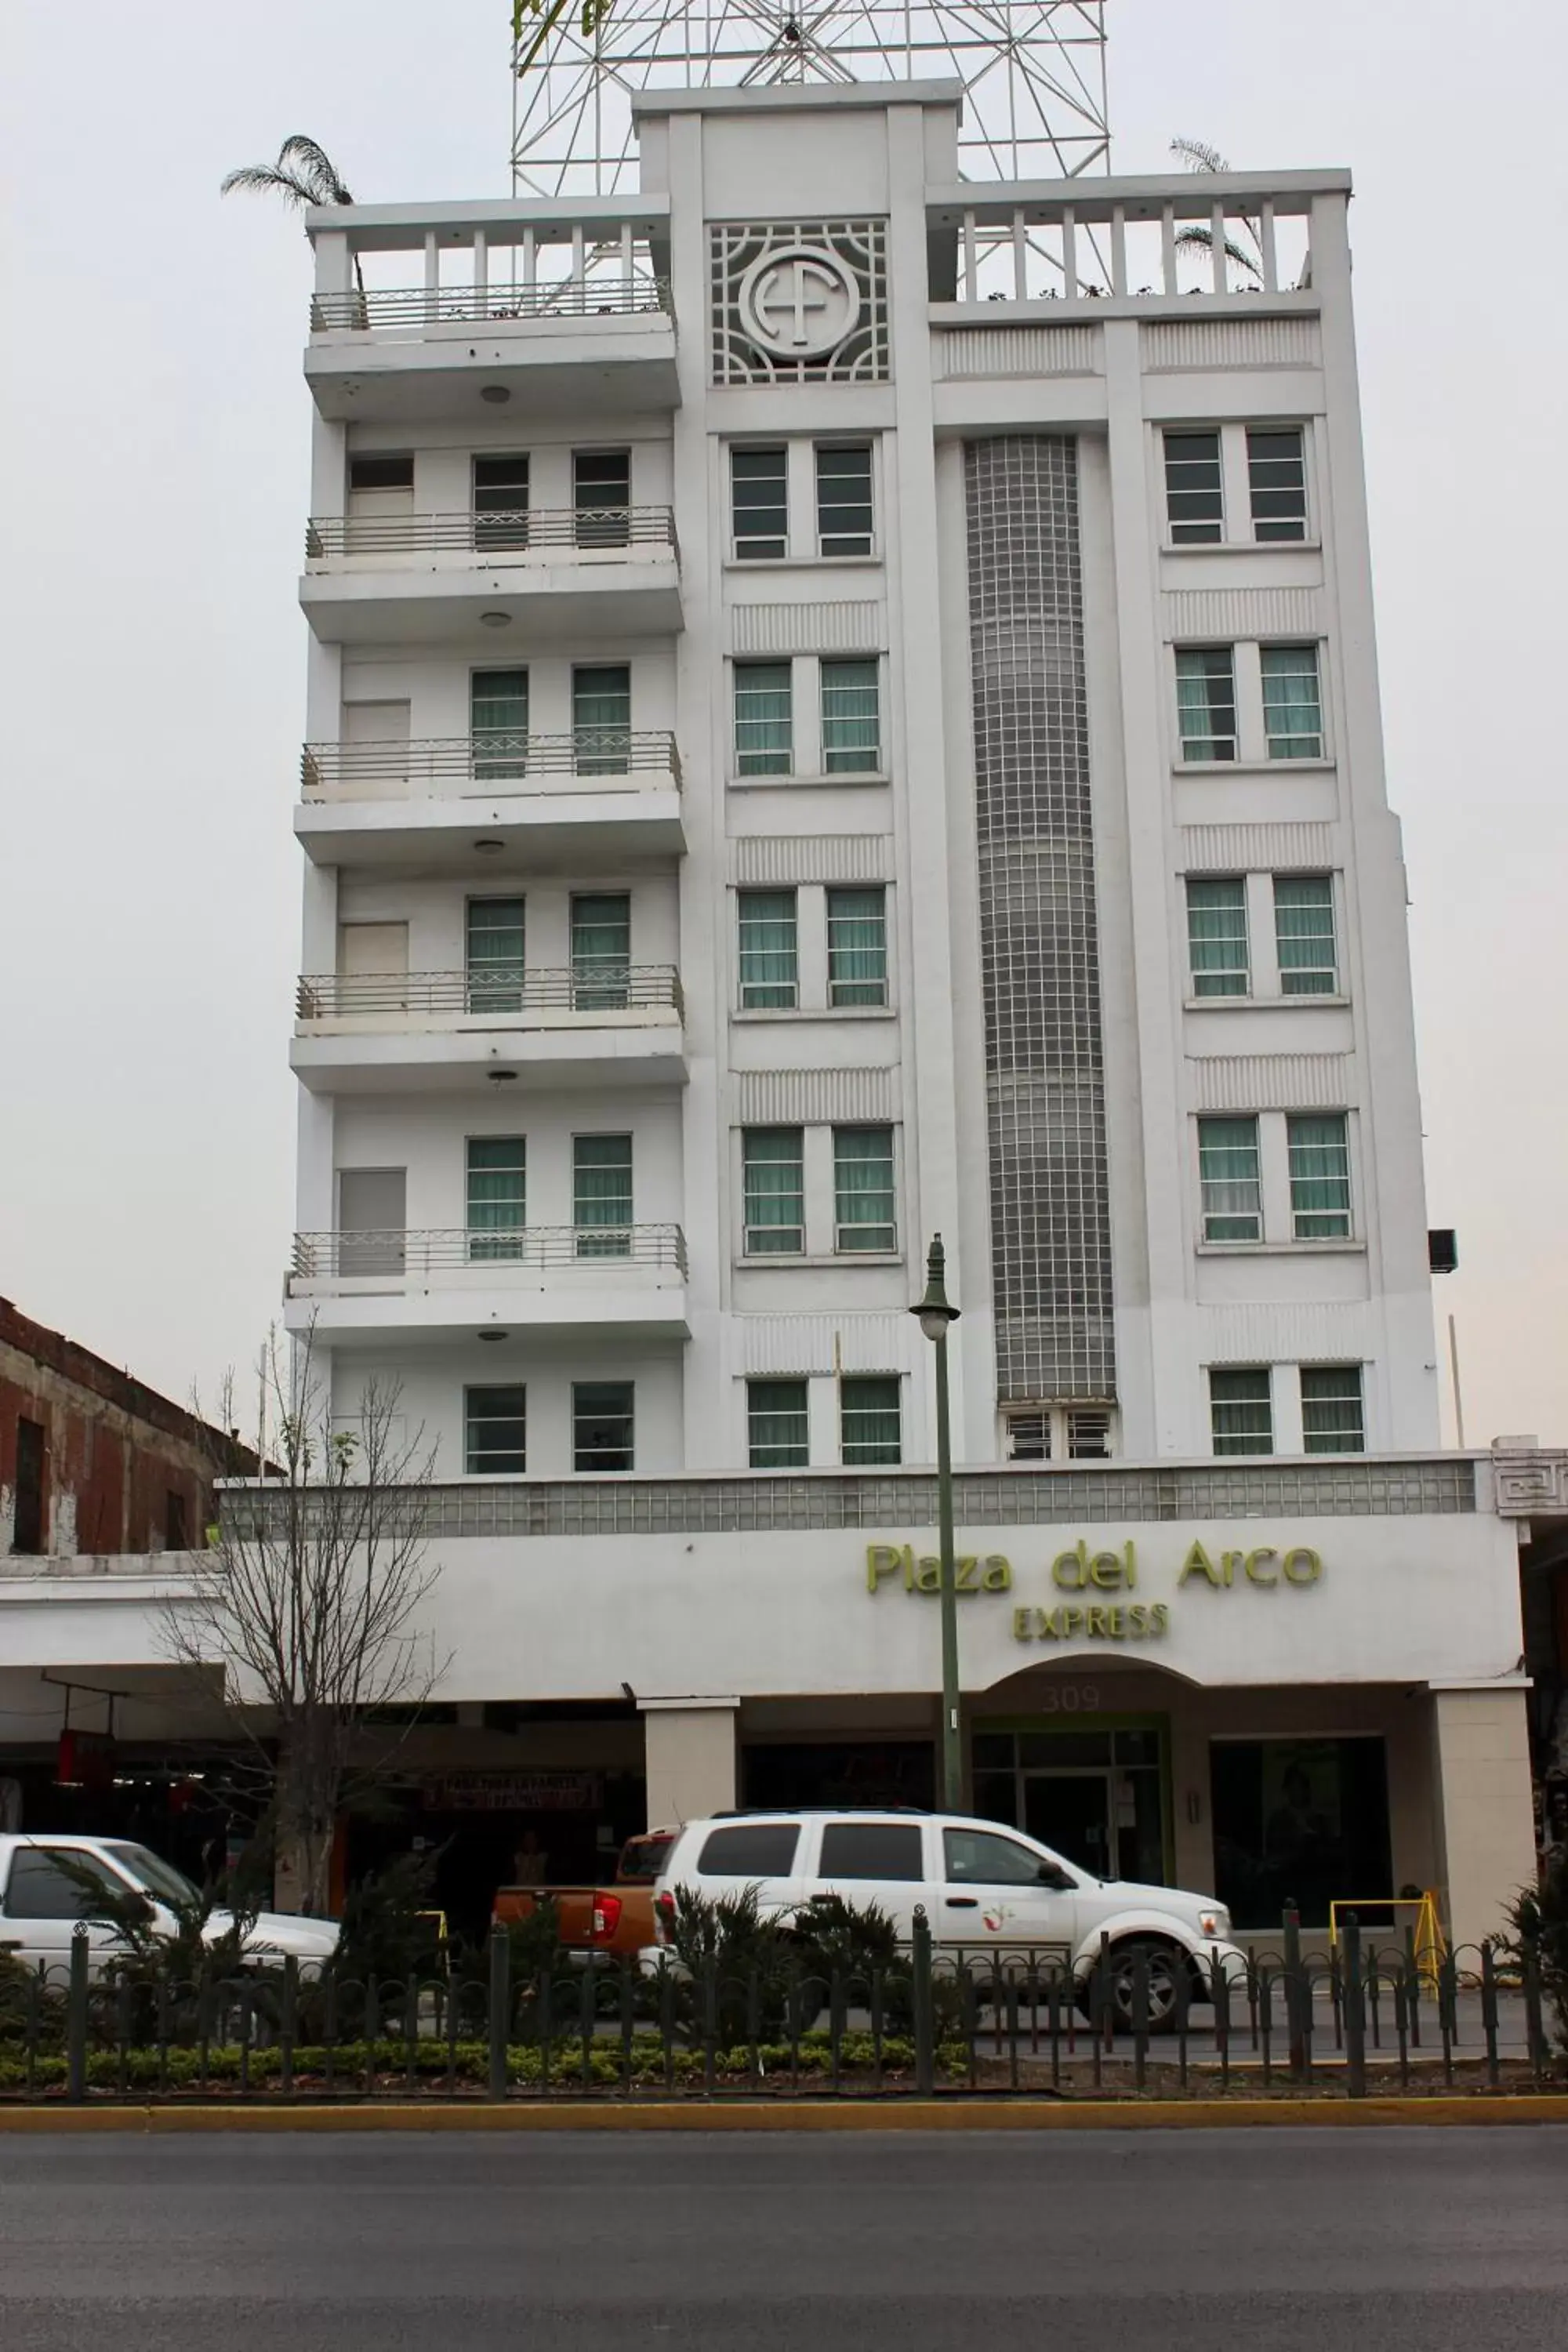 Facade/entrance, Property Building in Hotel Plaza del Arco Express